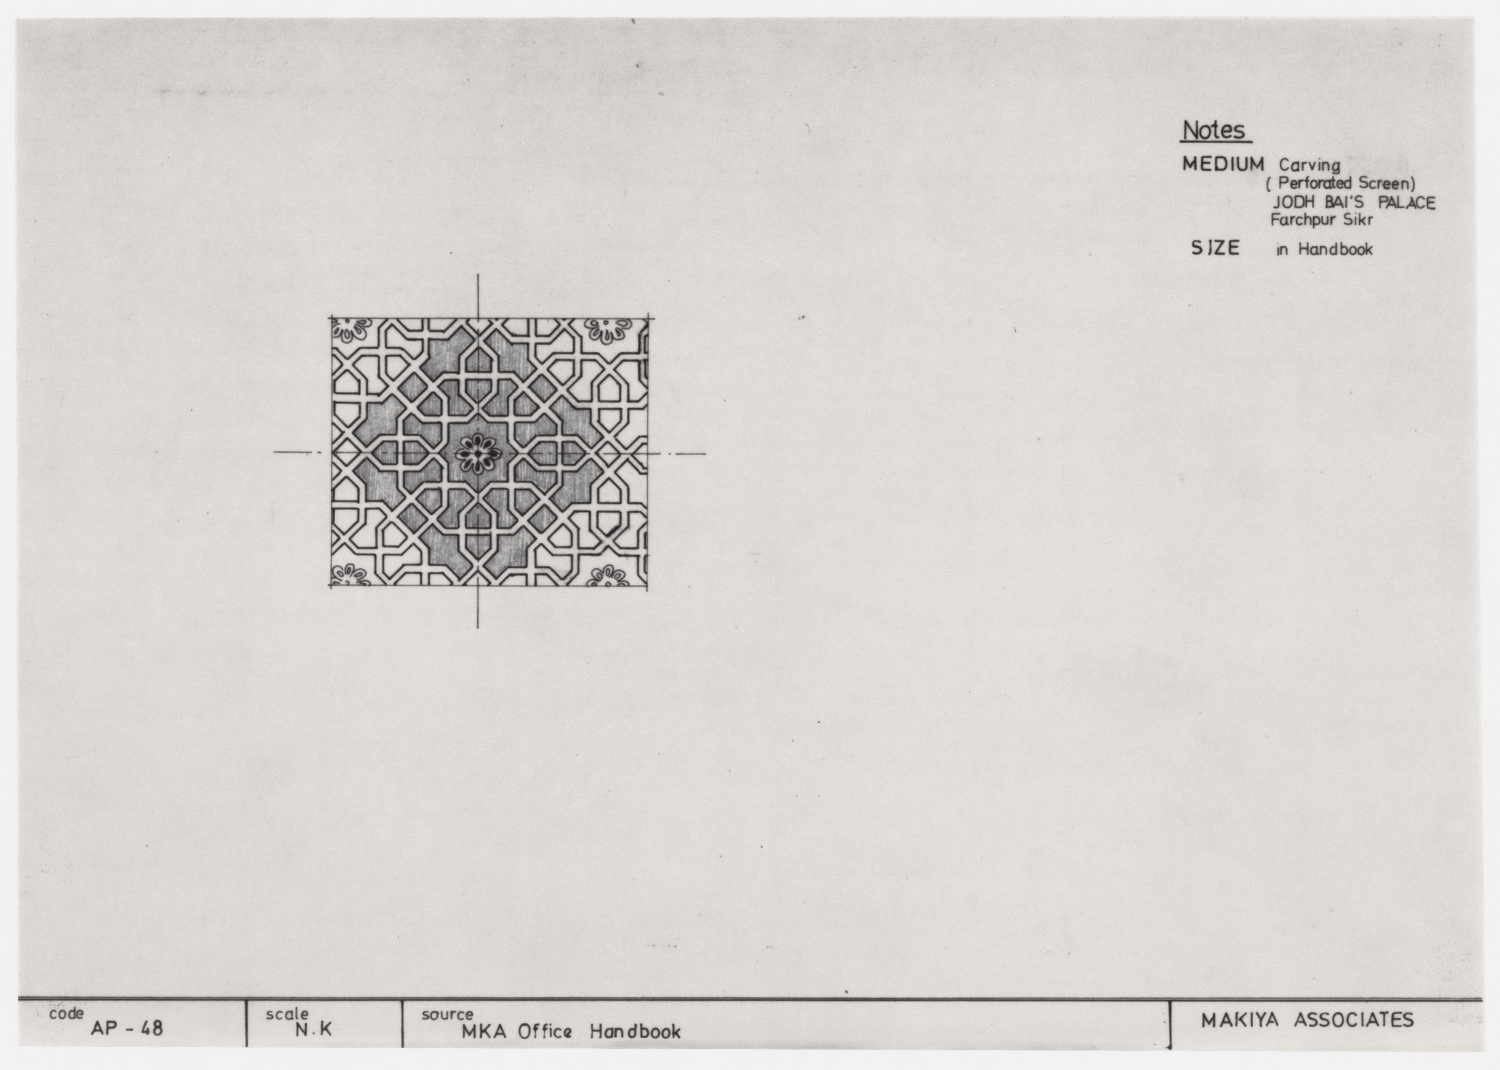 Carving (Perforated Screen) JODH BAI'S PALACE, Farchpur Sikr [sic]. AP-48, MKA Office Handbook